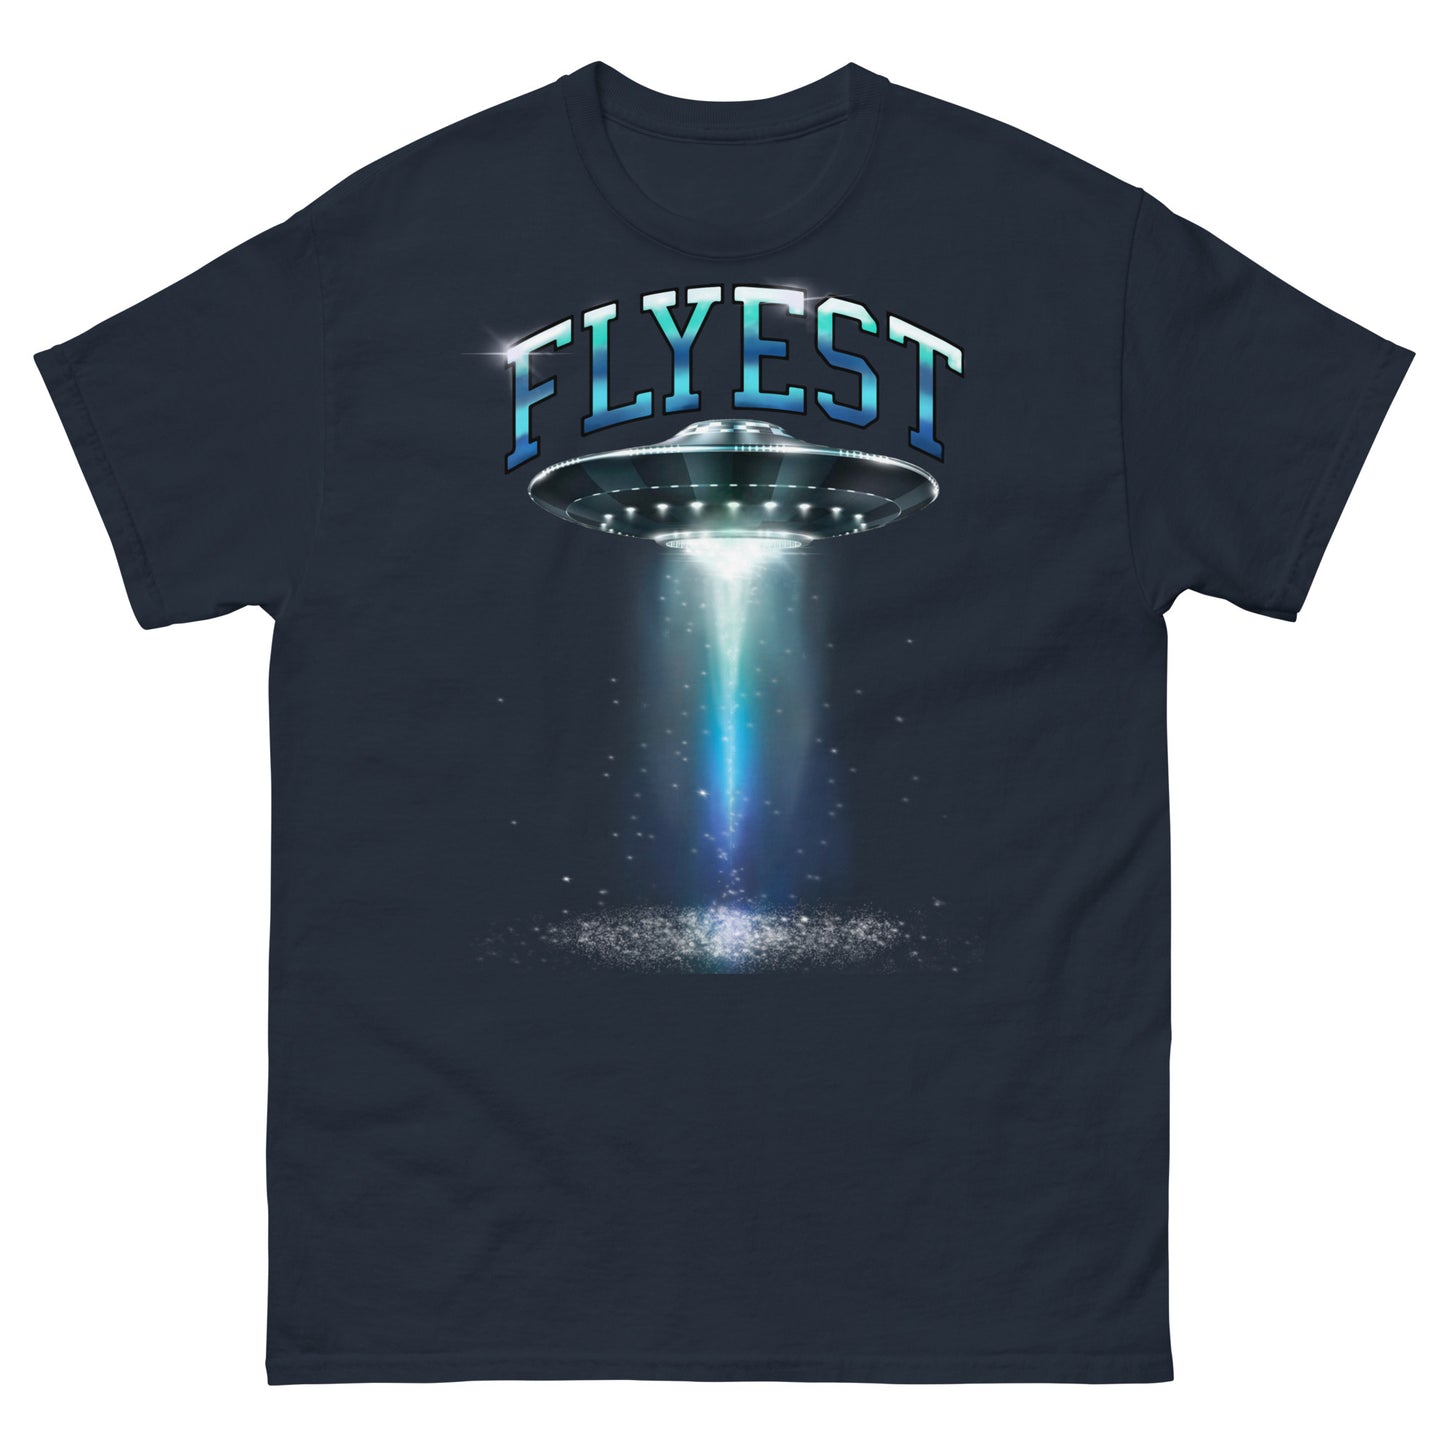 Flyest UFO tee